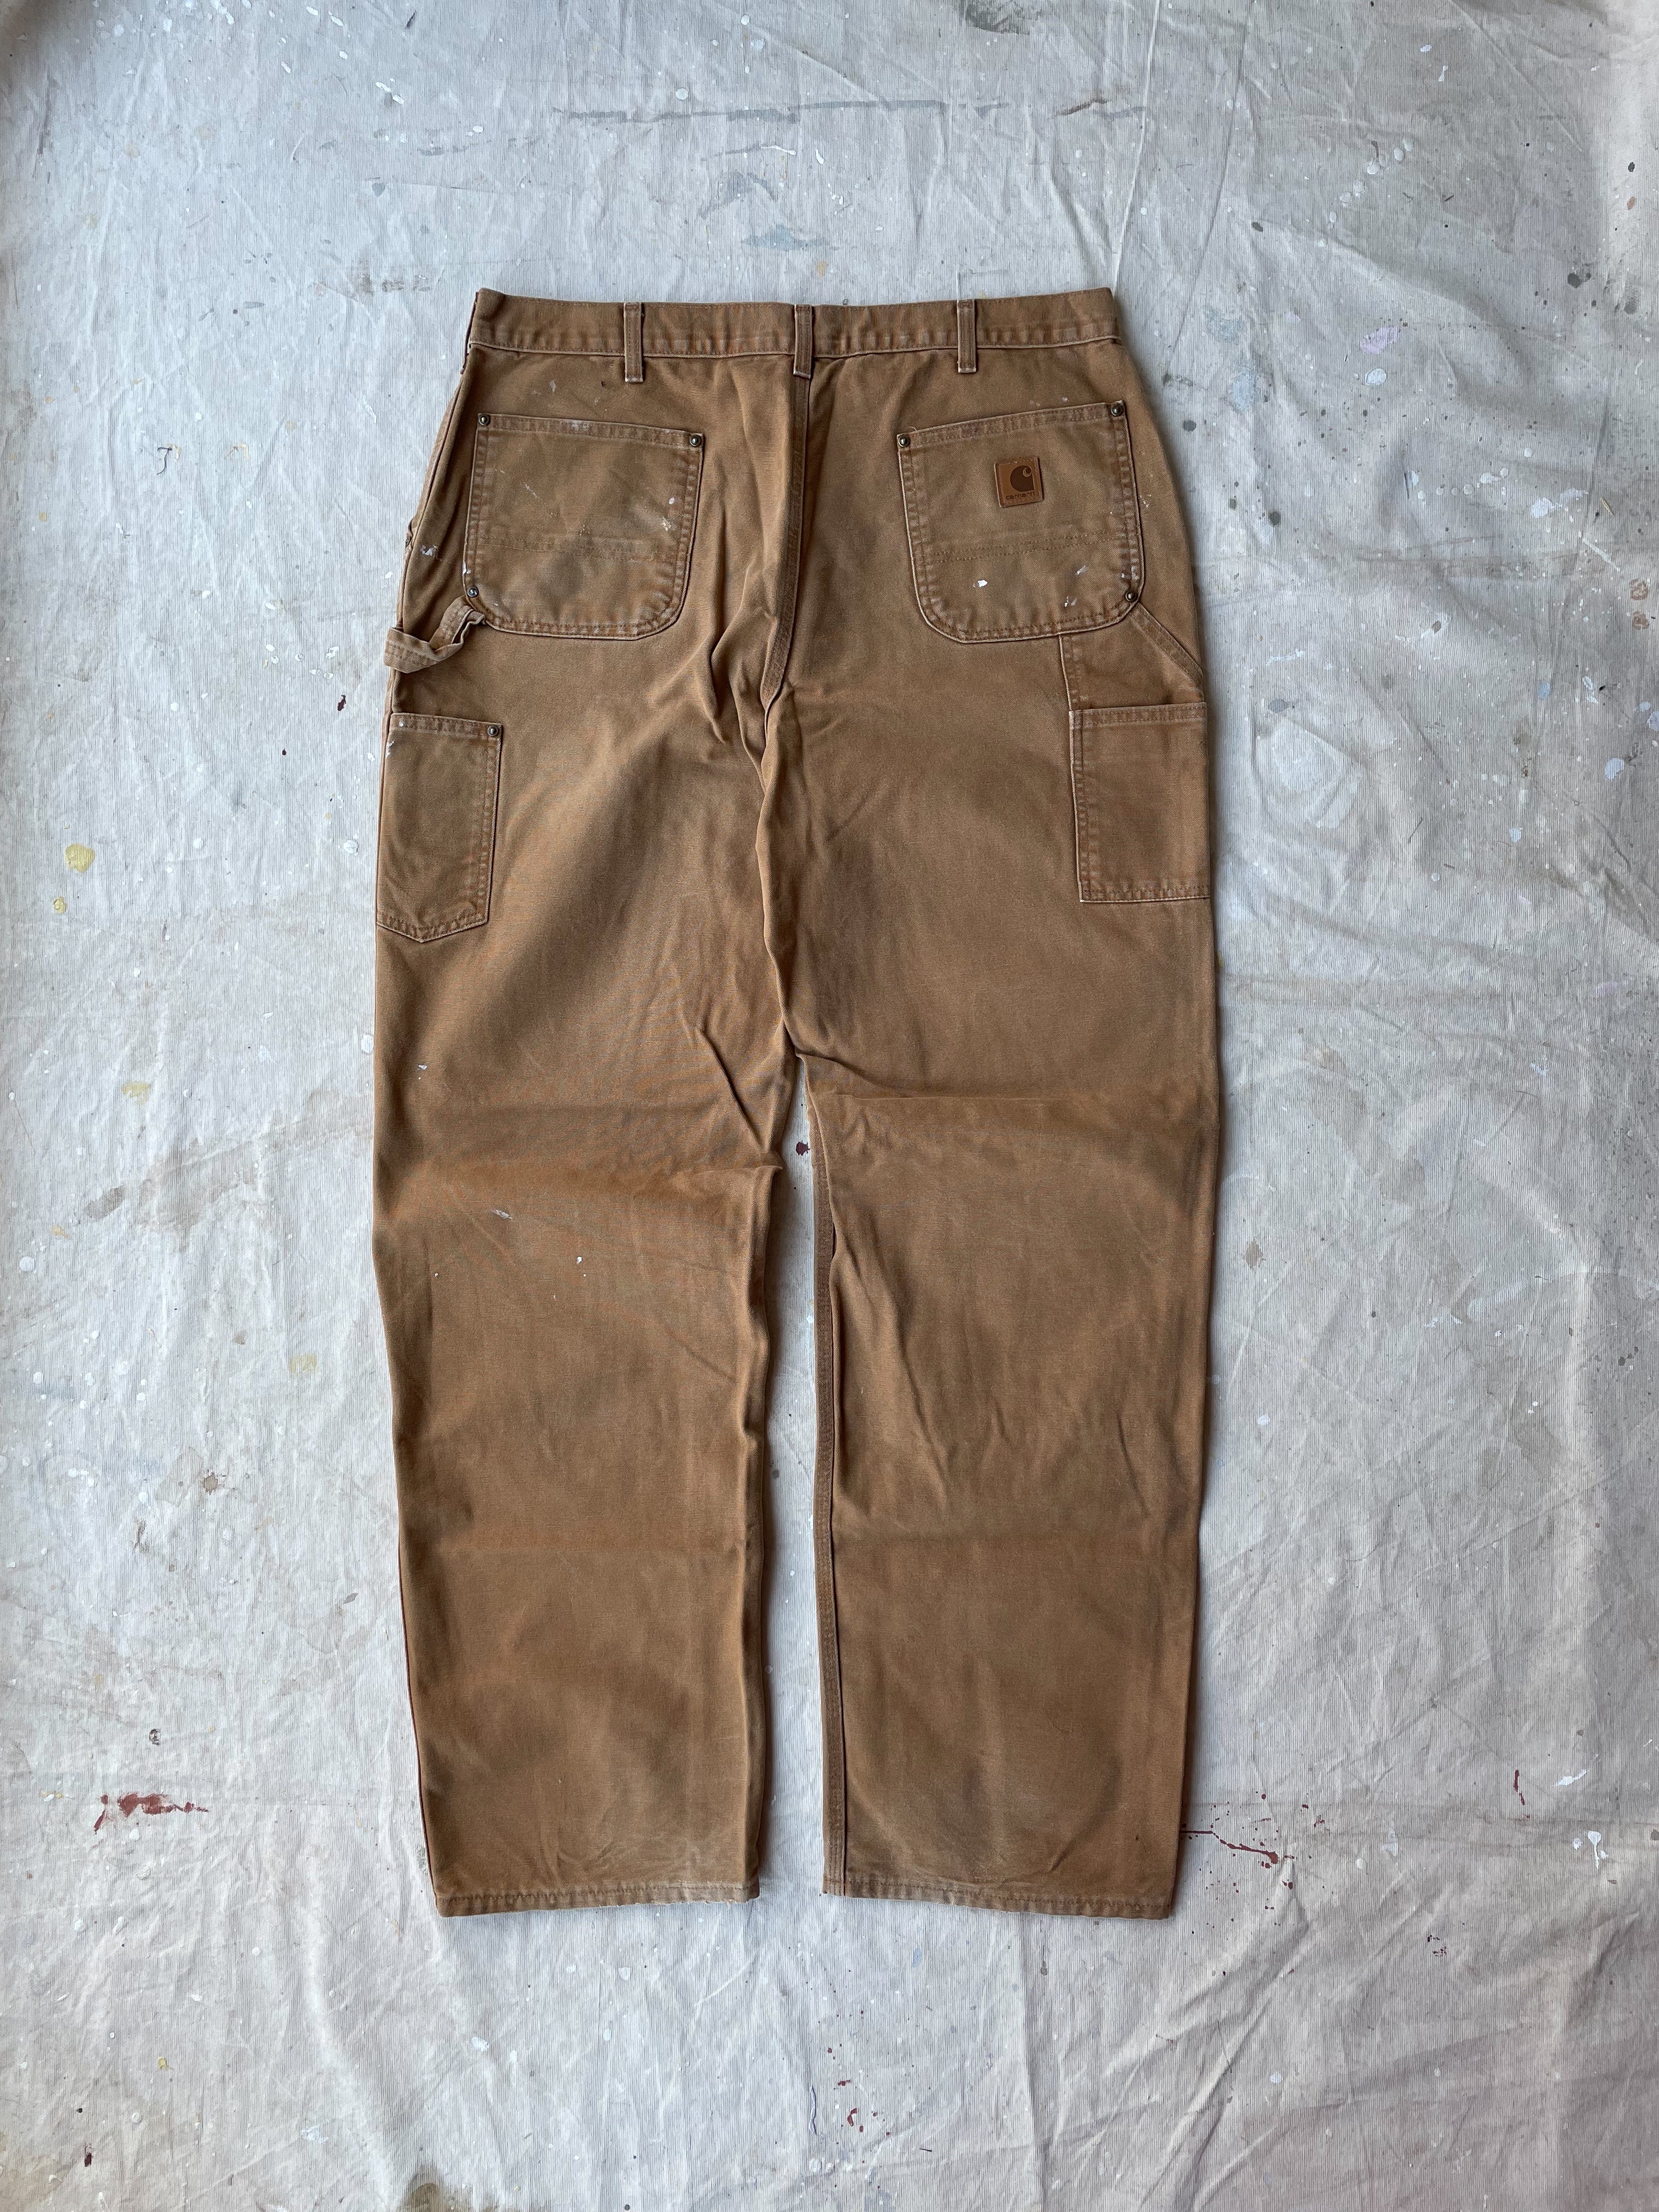 Carhartt Double Knee Pants—[38x36]